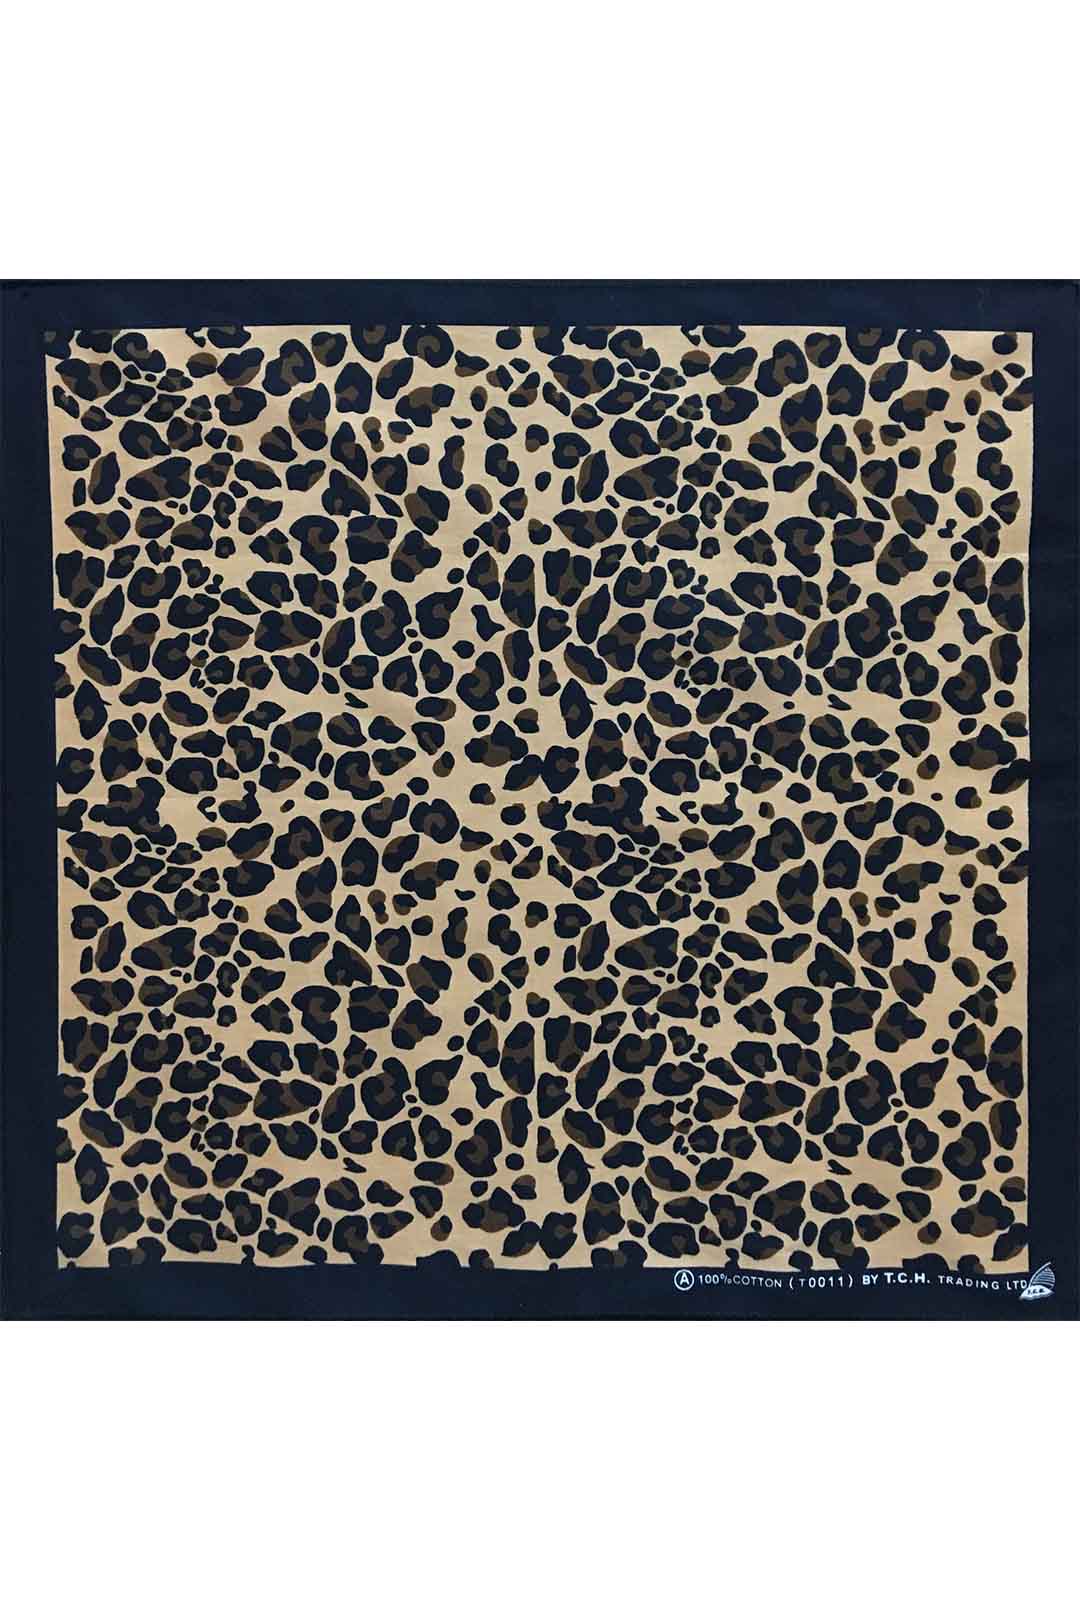 Leopard Print Bandana with black border